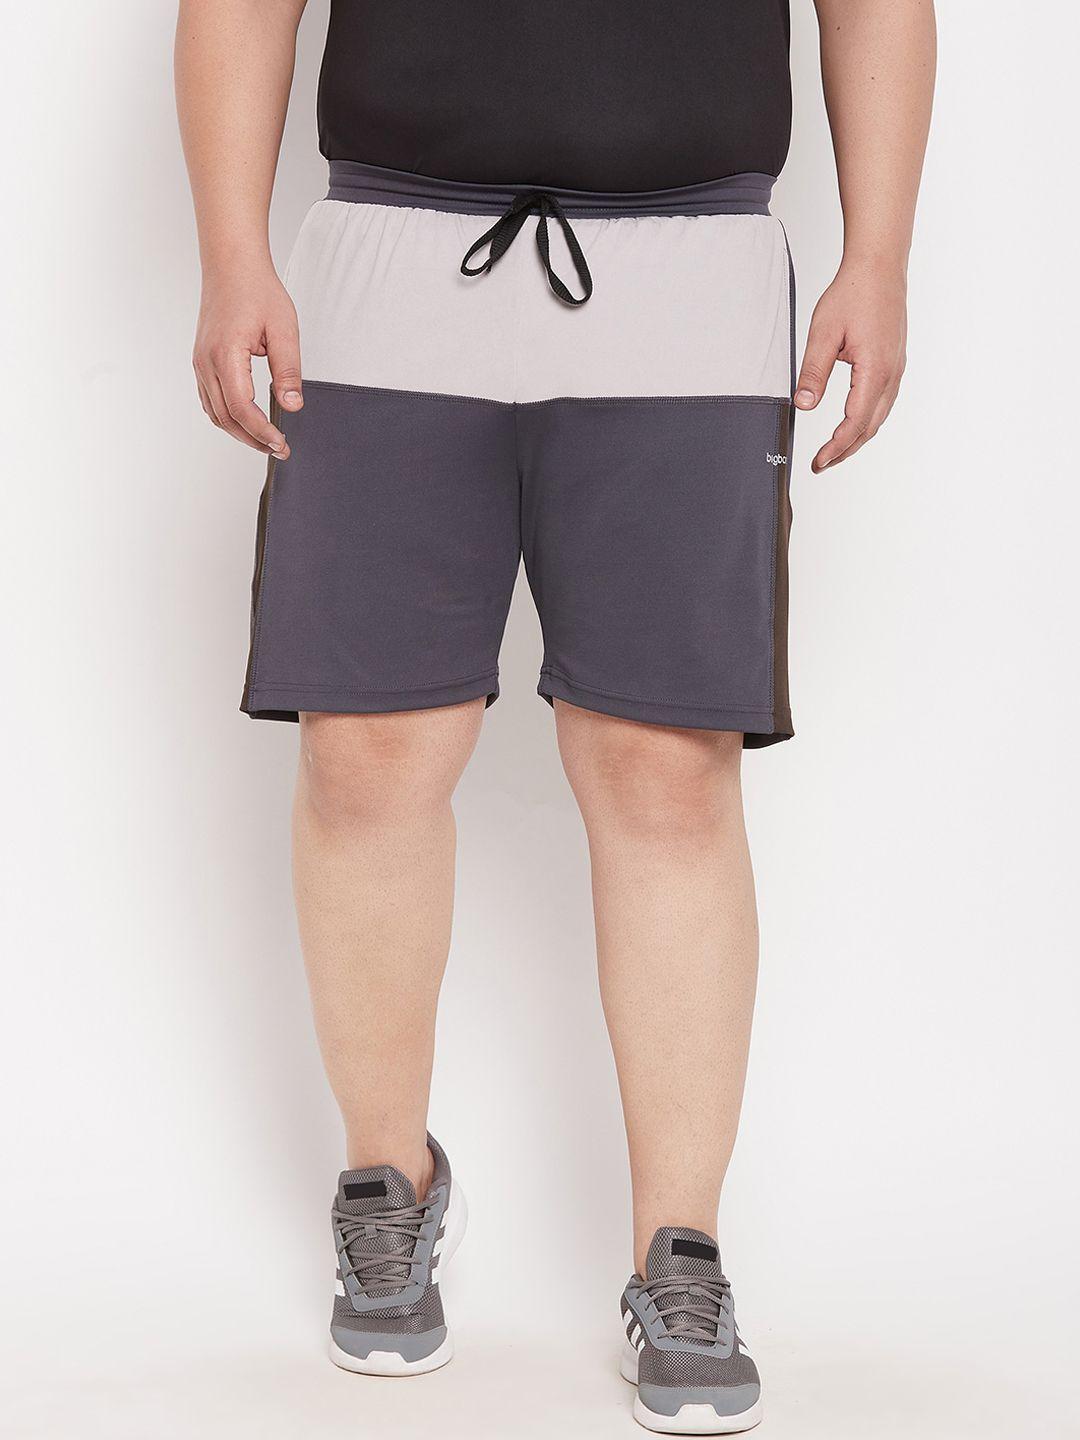 bigbanana-men-plus-size-multicoloured-colourblocked-sports-shorts